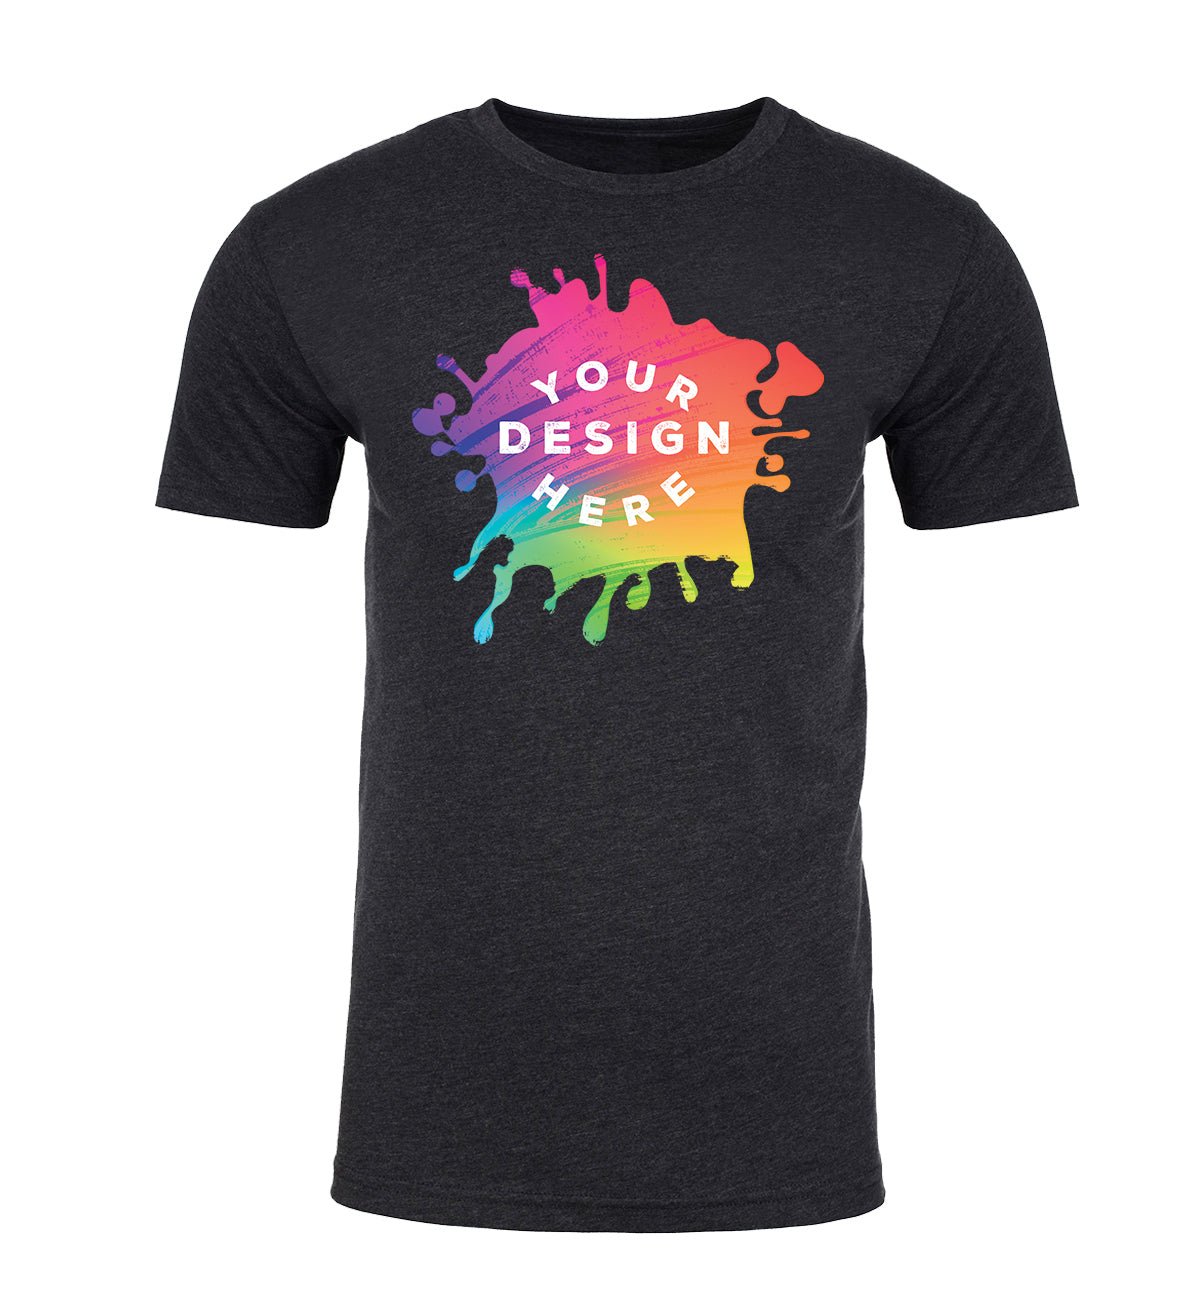 Custom Softball T-Shirt Designs: View 40 NEW Design Ideas. Order w